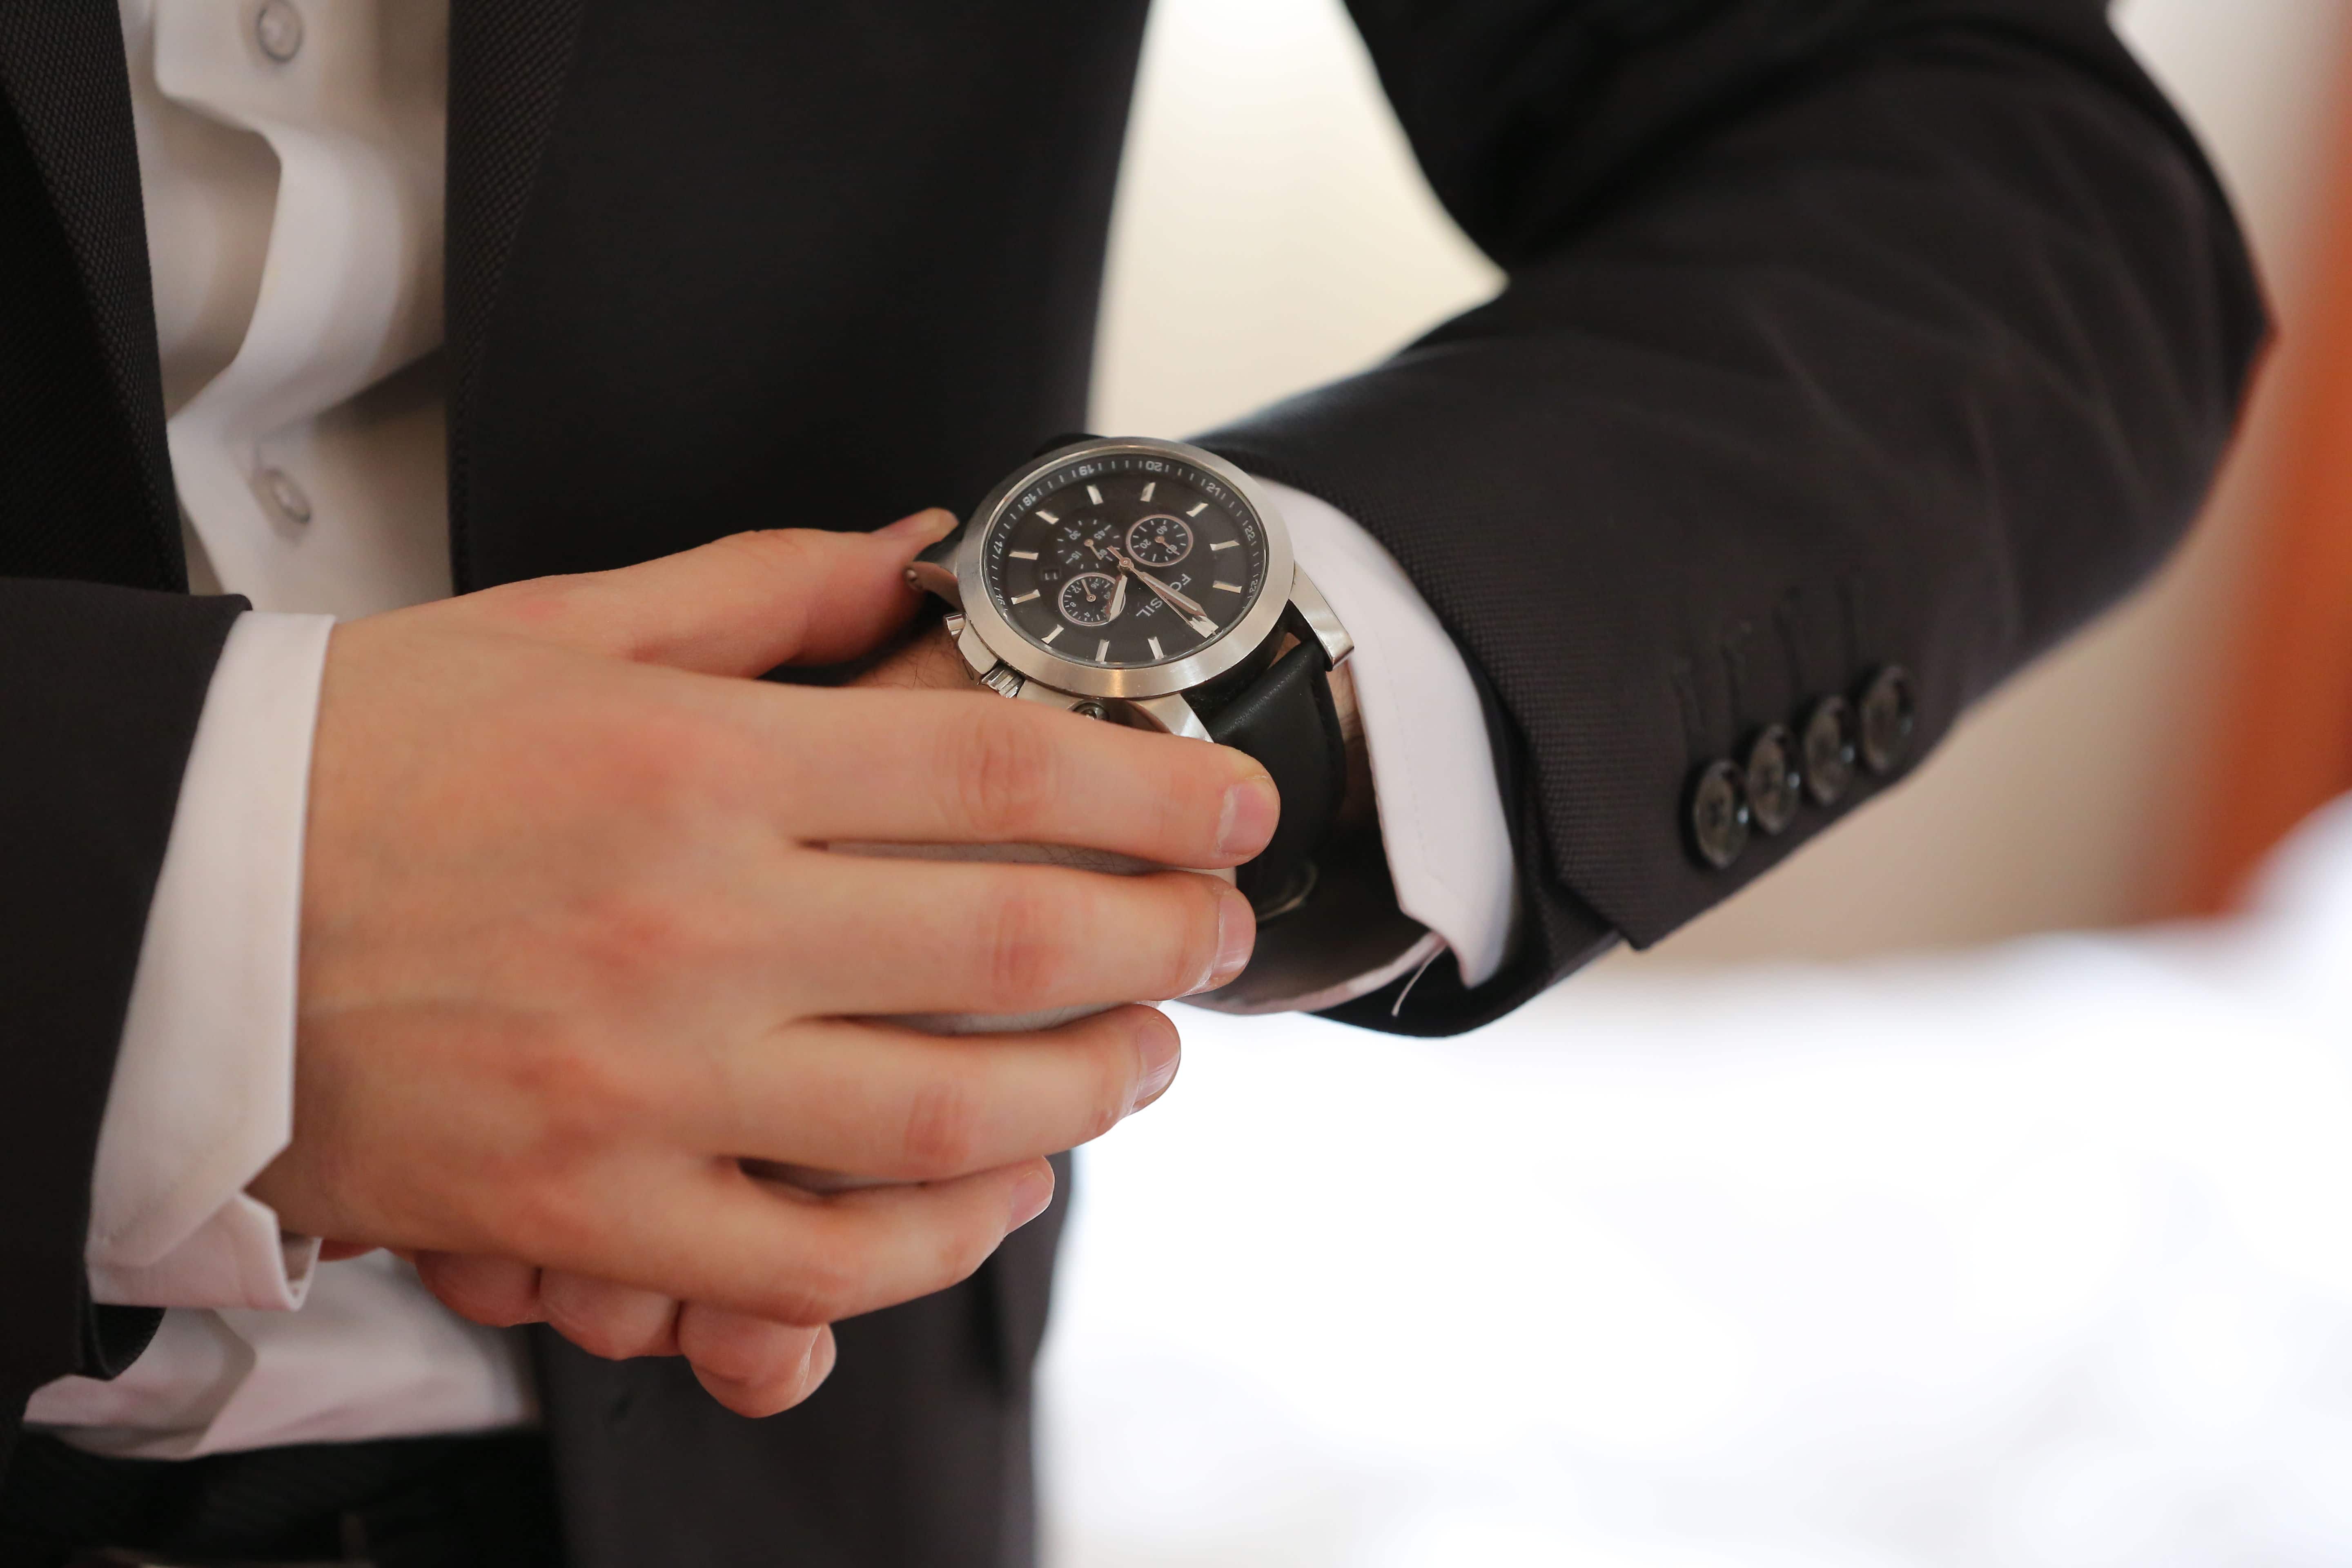 Сдать наручные часы. Наручные часы на руке. Часы ручные на руке. Мужчина с часами на руке. Мужская рука с часами.